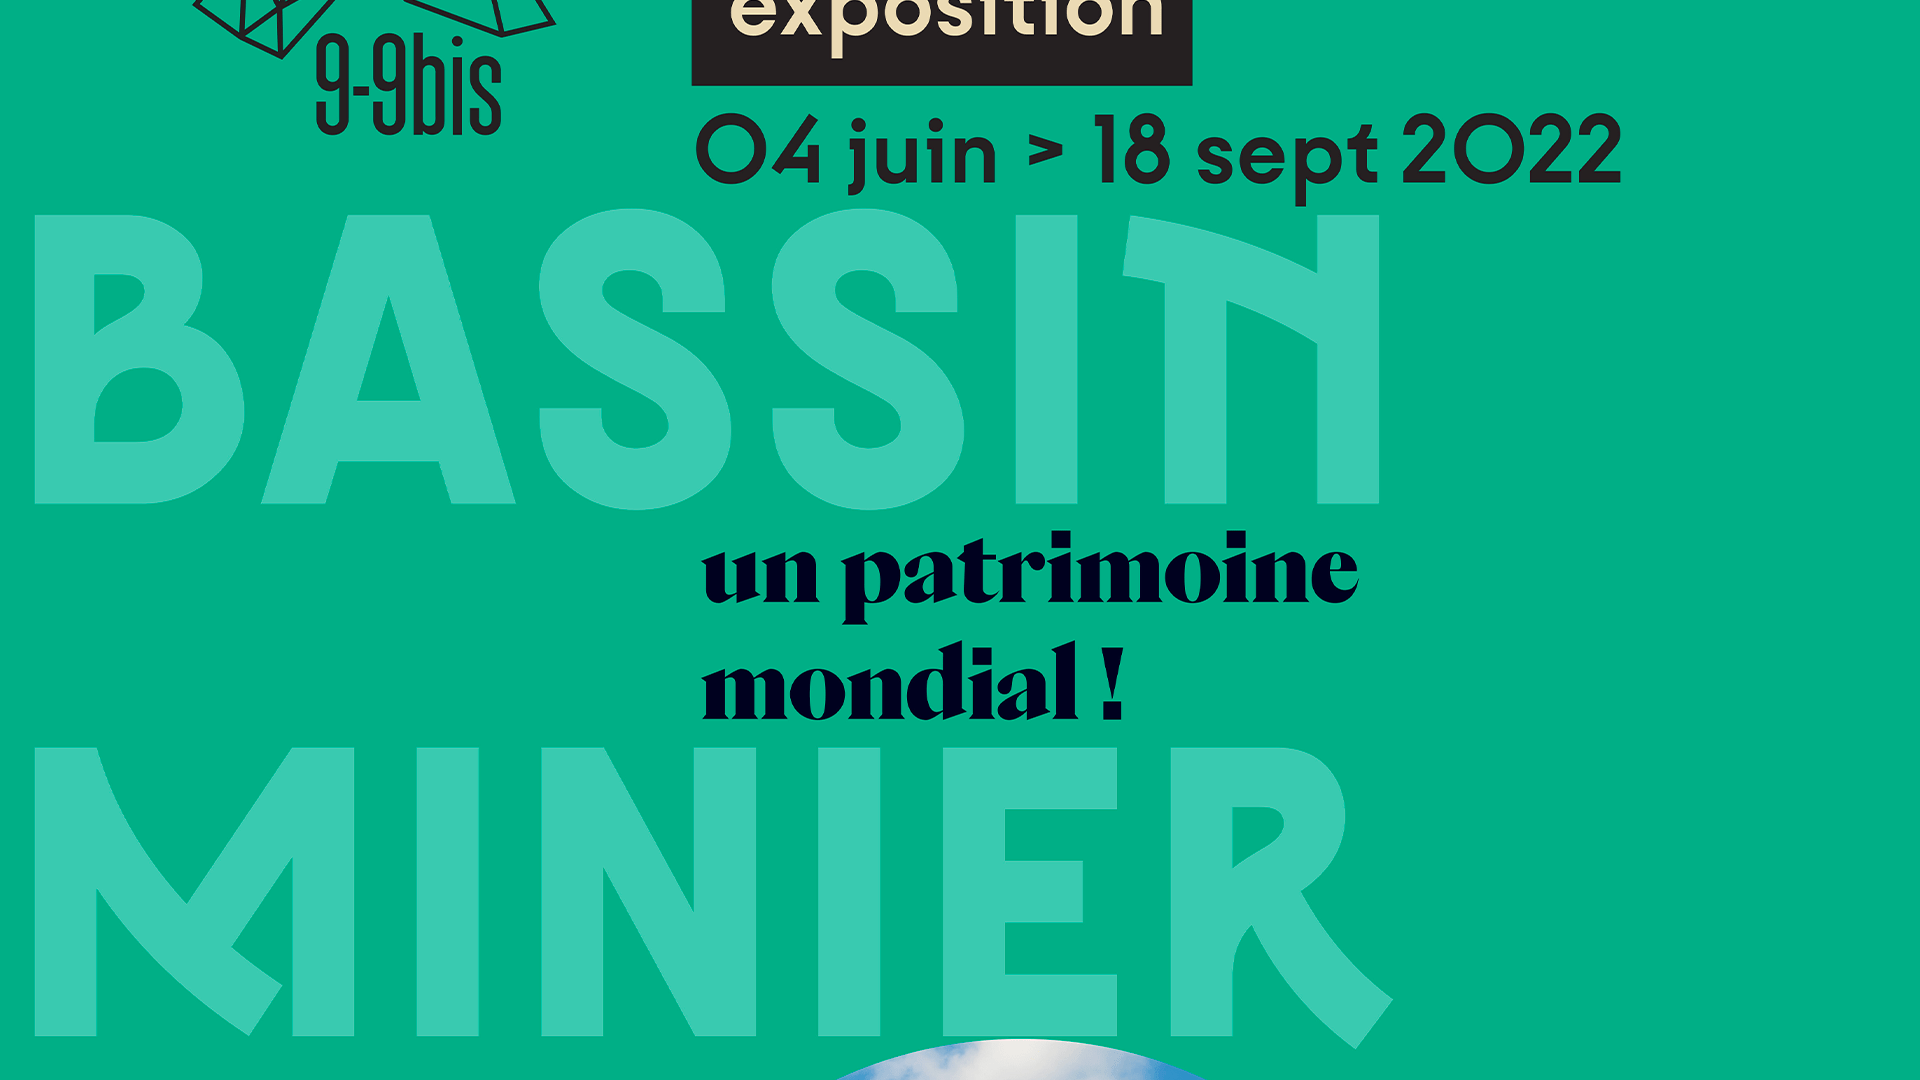 OBJECTIF BASSIN MINIER : un patrimoine mondial ! - 9-9bis - Oignies - Artoiscope